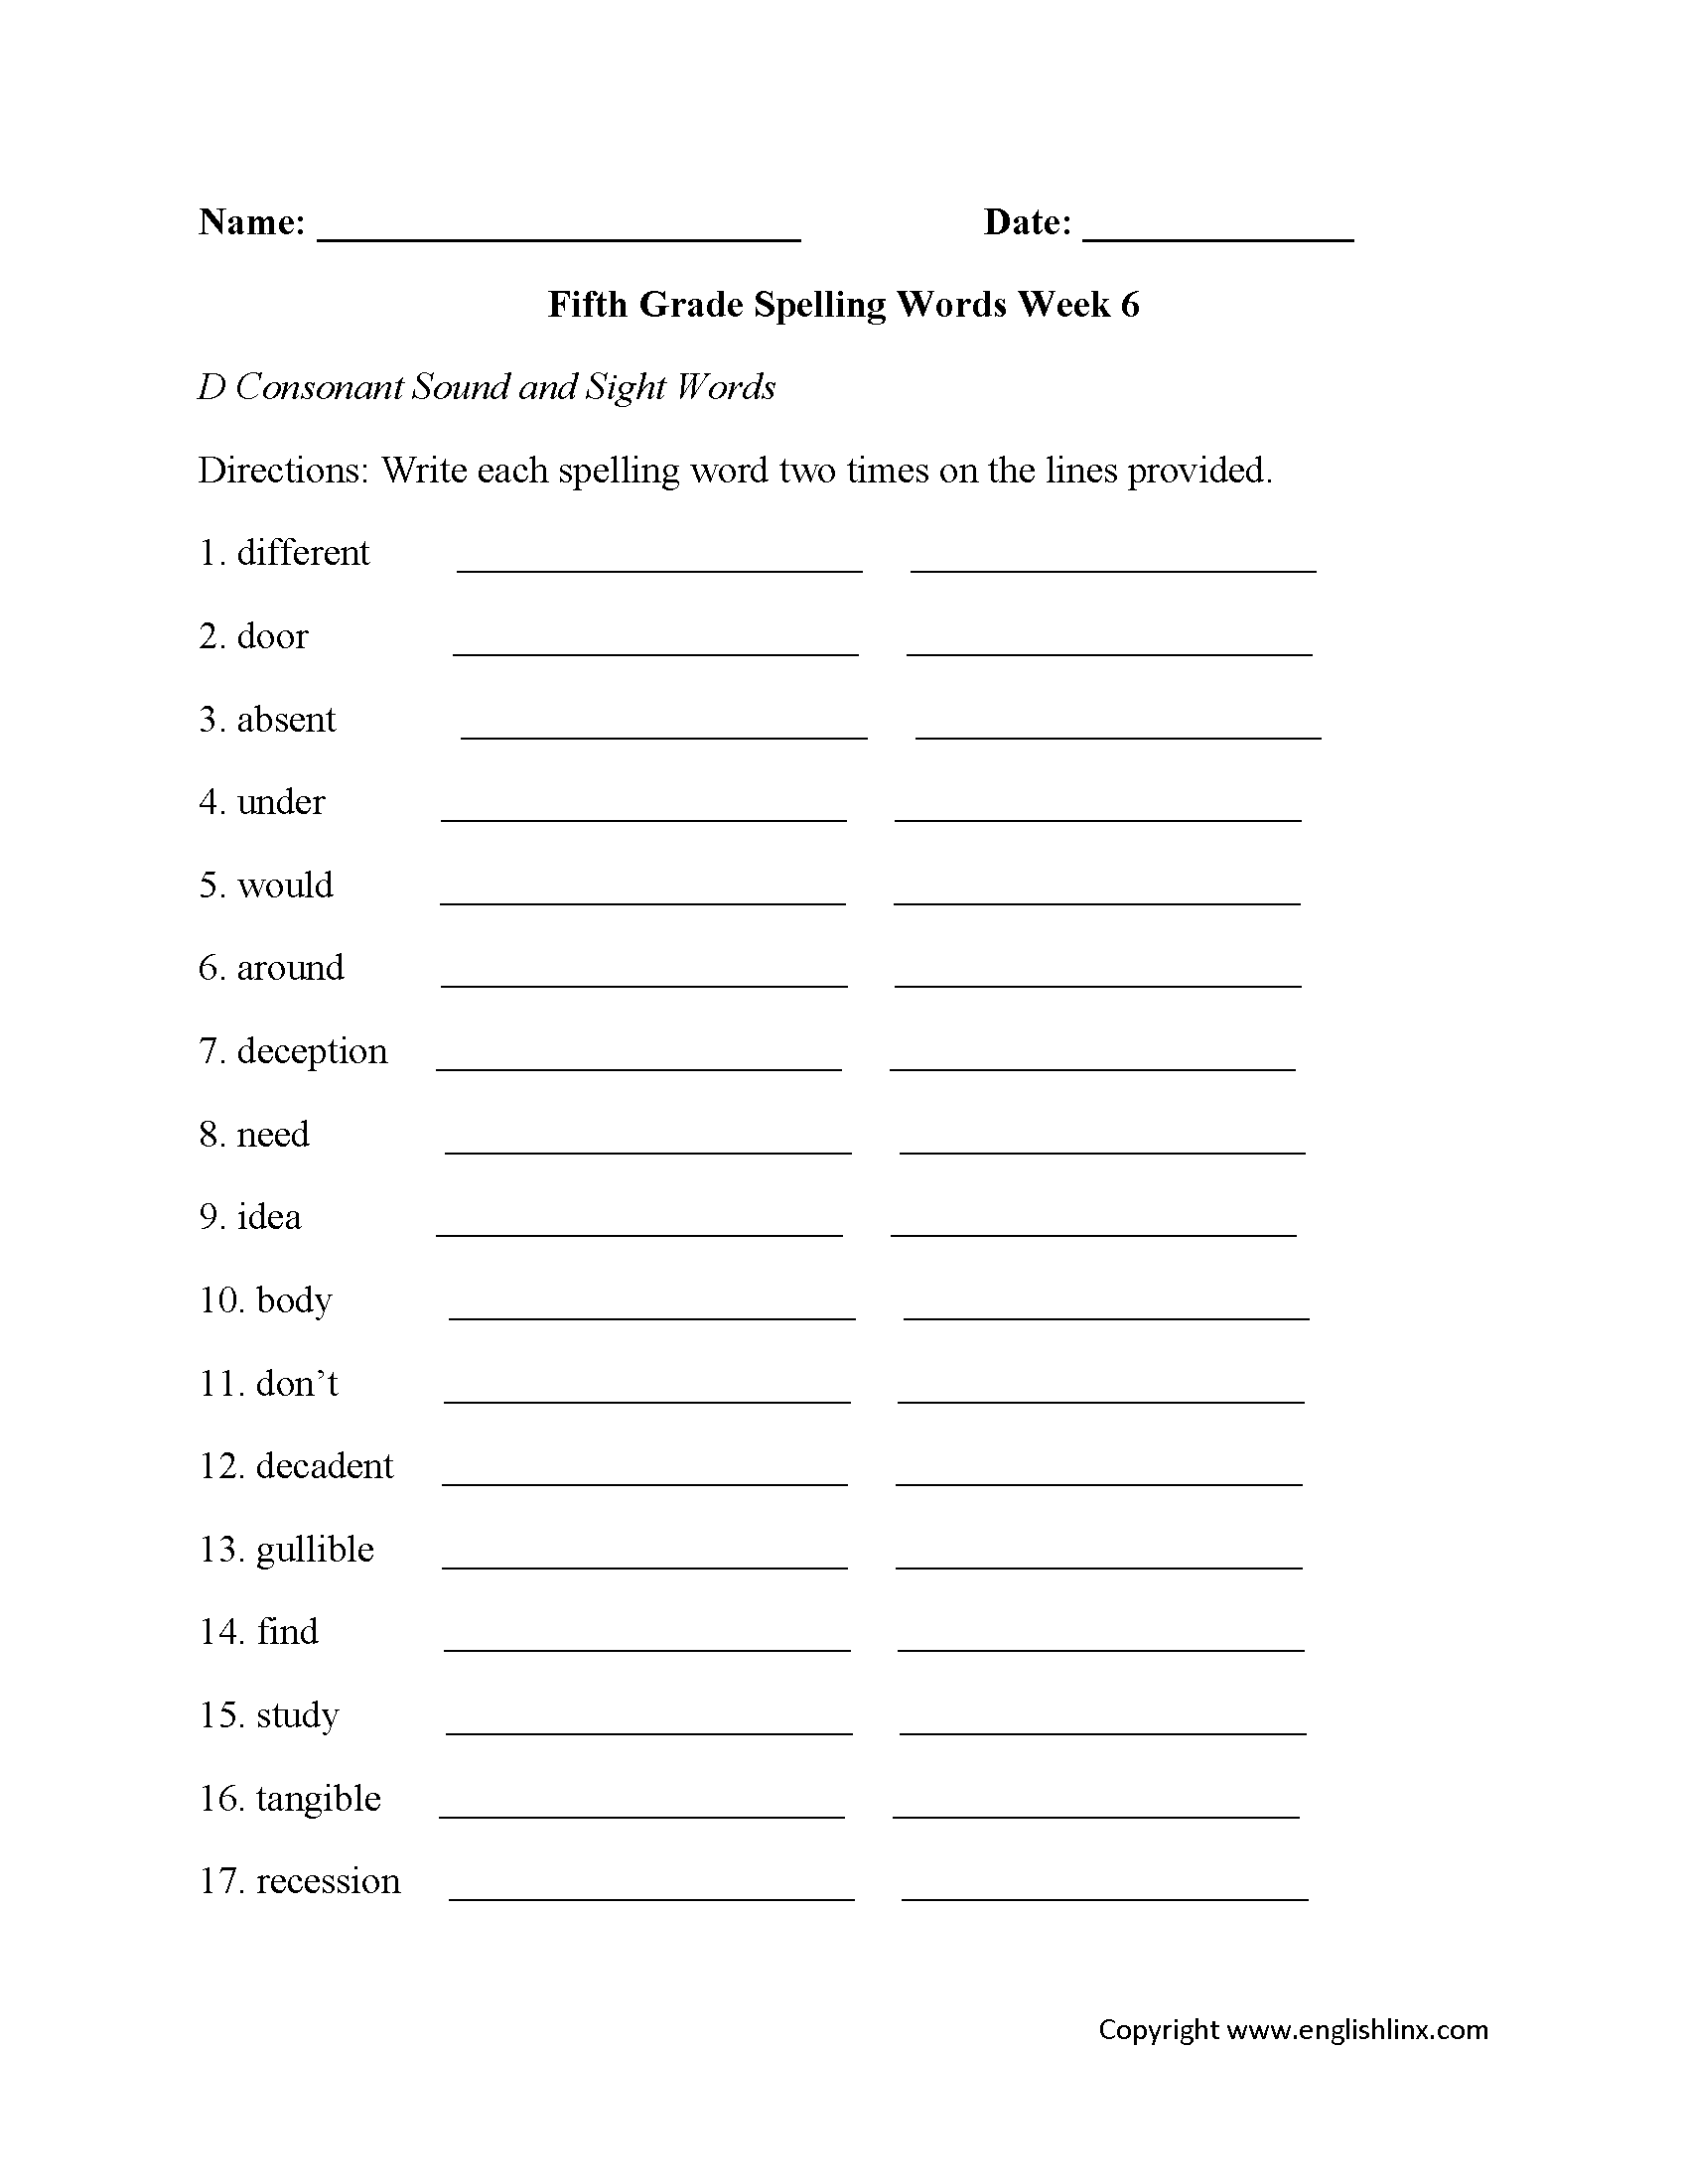 spelling-worksheets-fifth-grade-spelling-worksheets